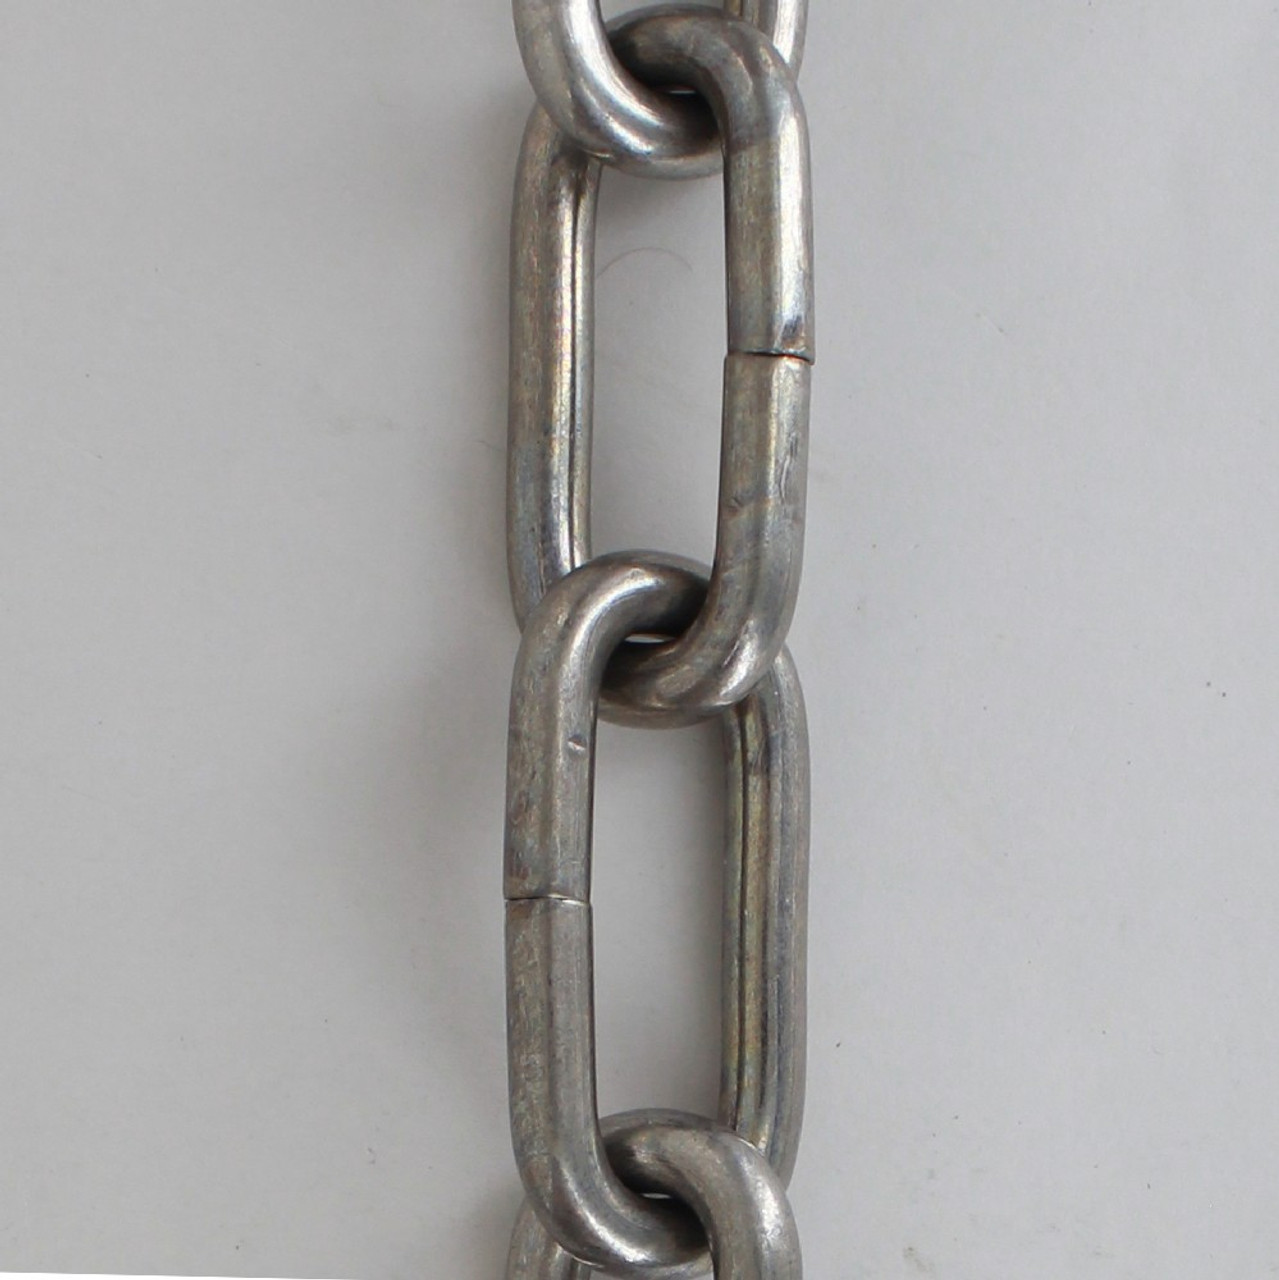 1 Gauge (5/16in.) Thick Steel Chain - Antique Brass Finish